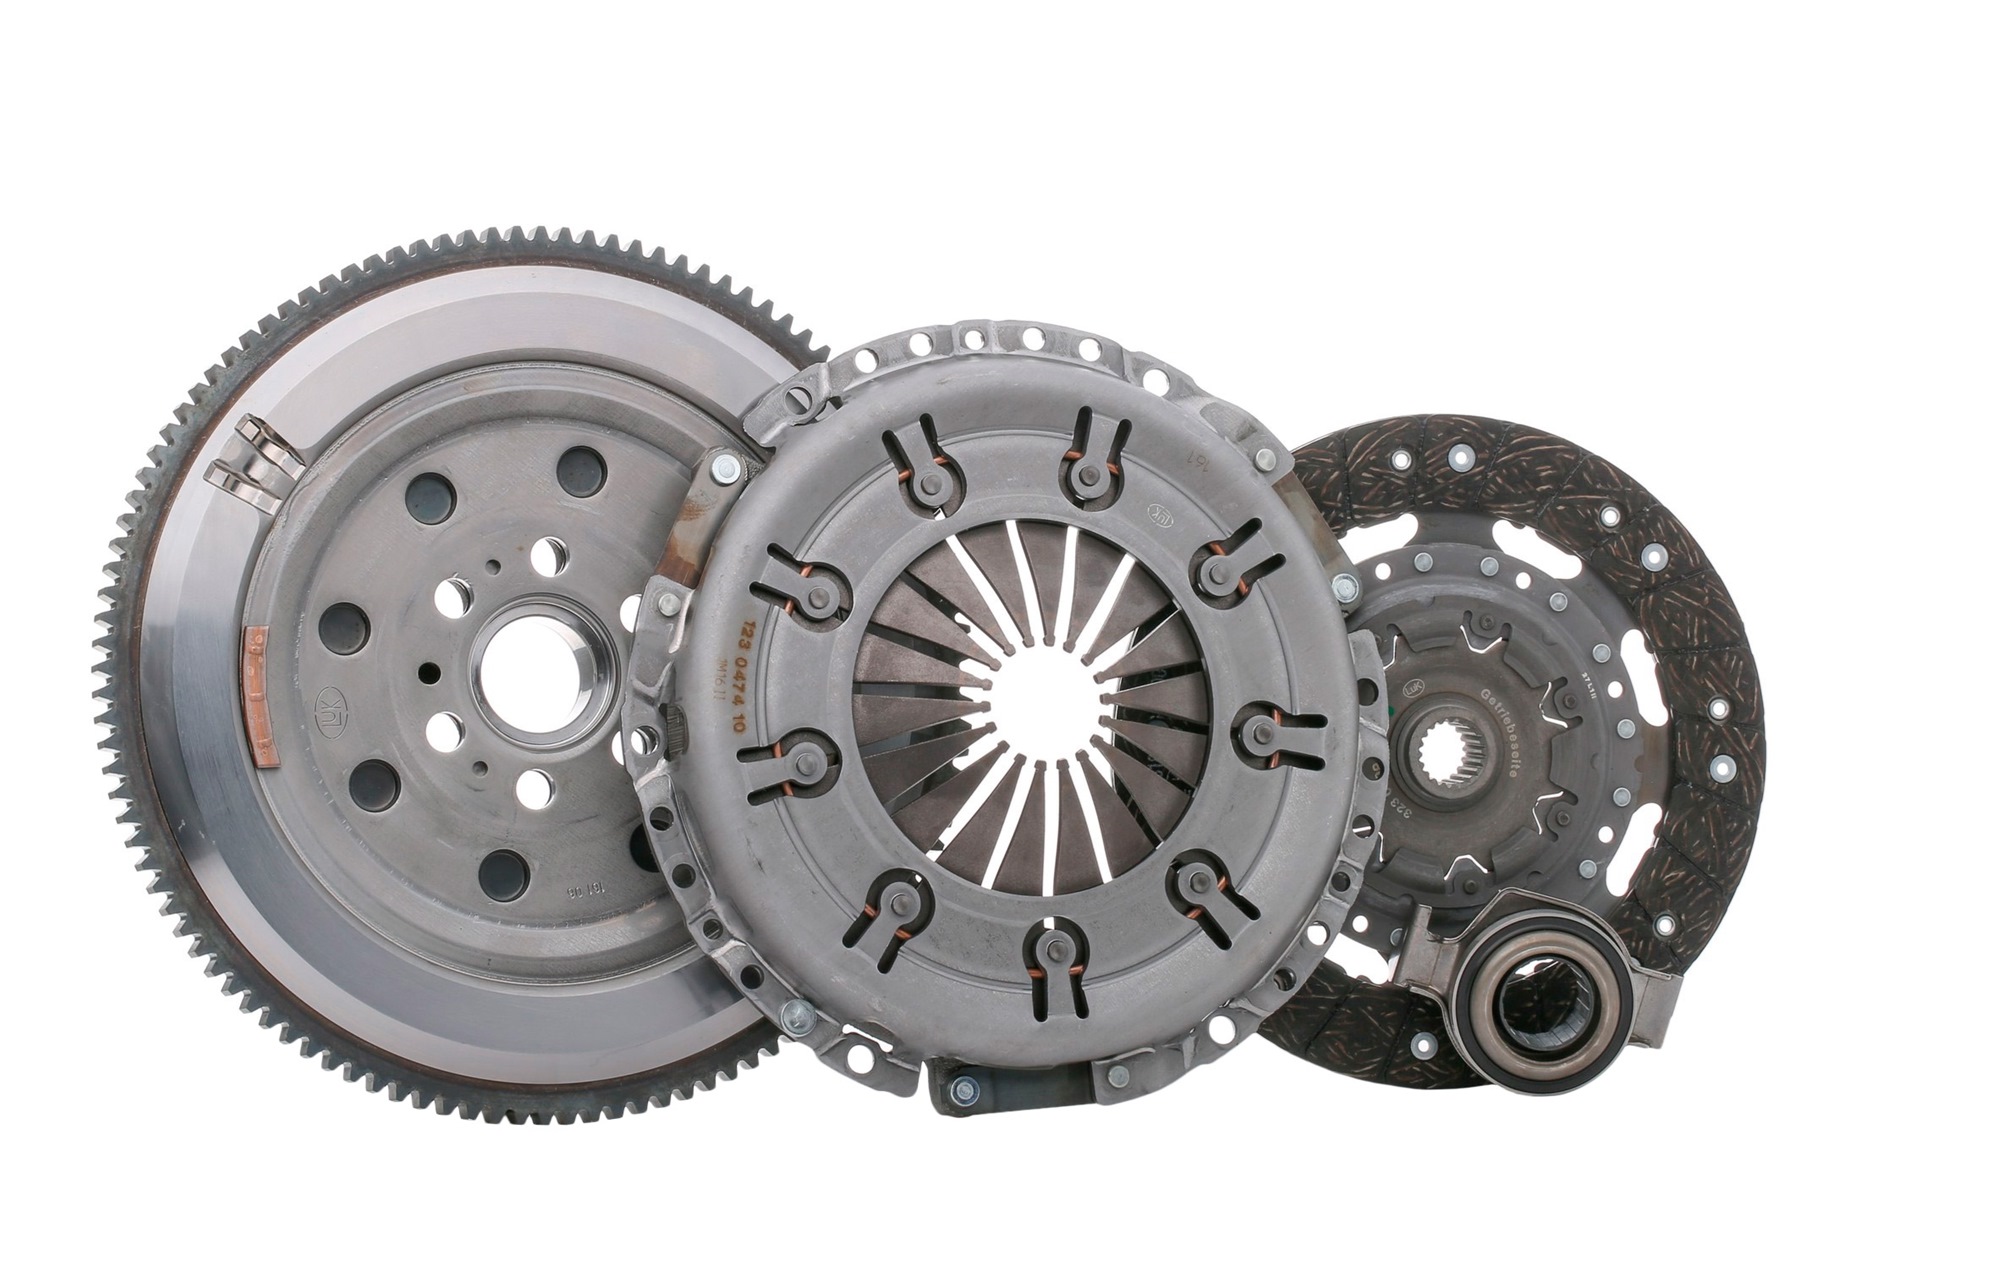 Fiat BRAVO Clutch system parts - Clutch kit LuK 600 0216 00